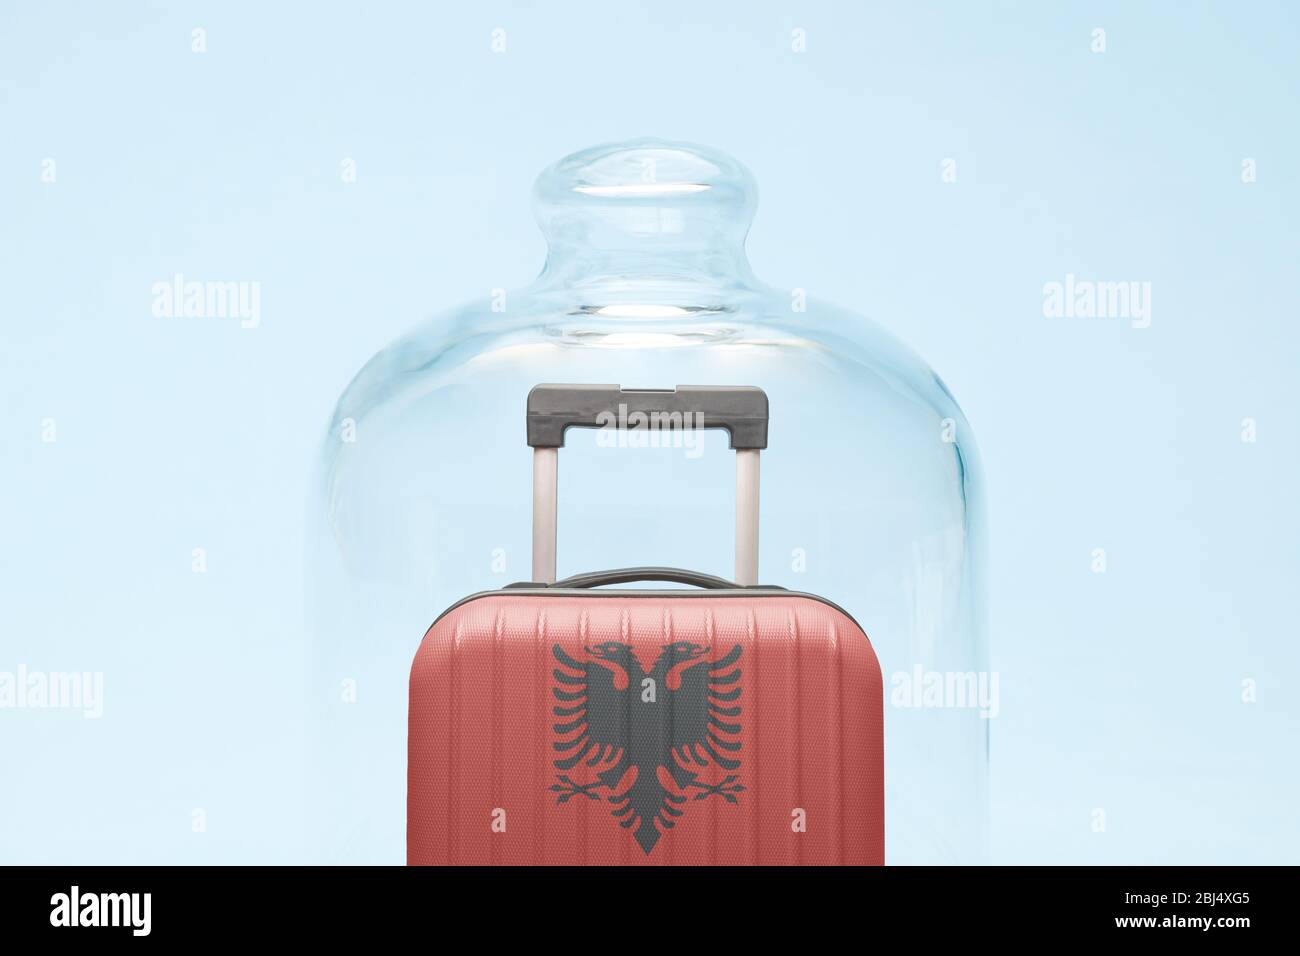 Suitcase with Albanian flag design in quarantine minimal creative coronavirus travel restriction concept. Stock Photo